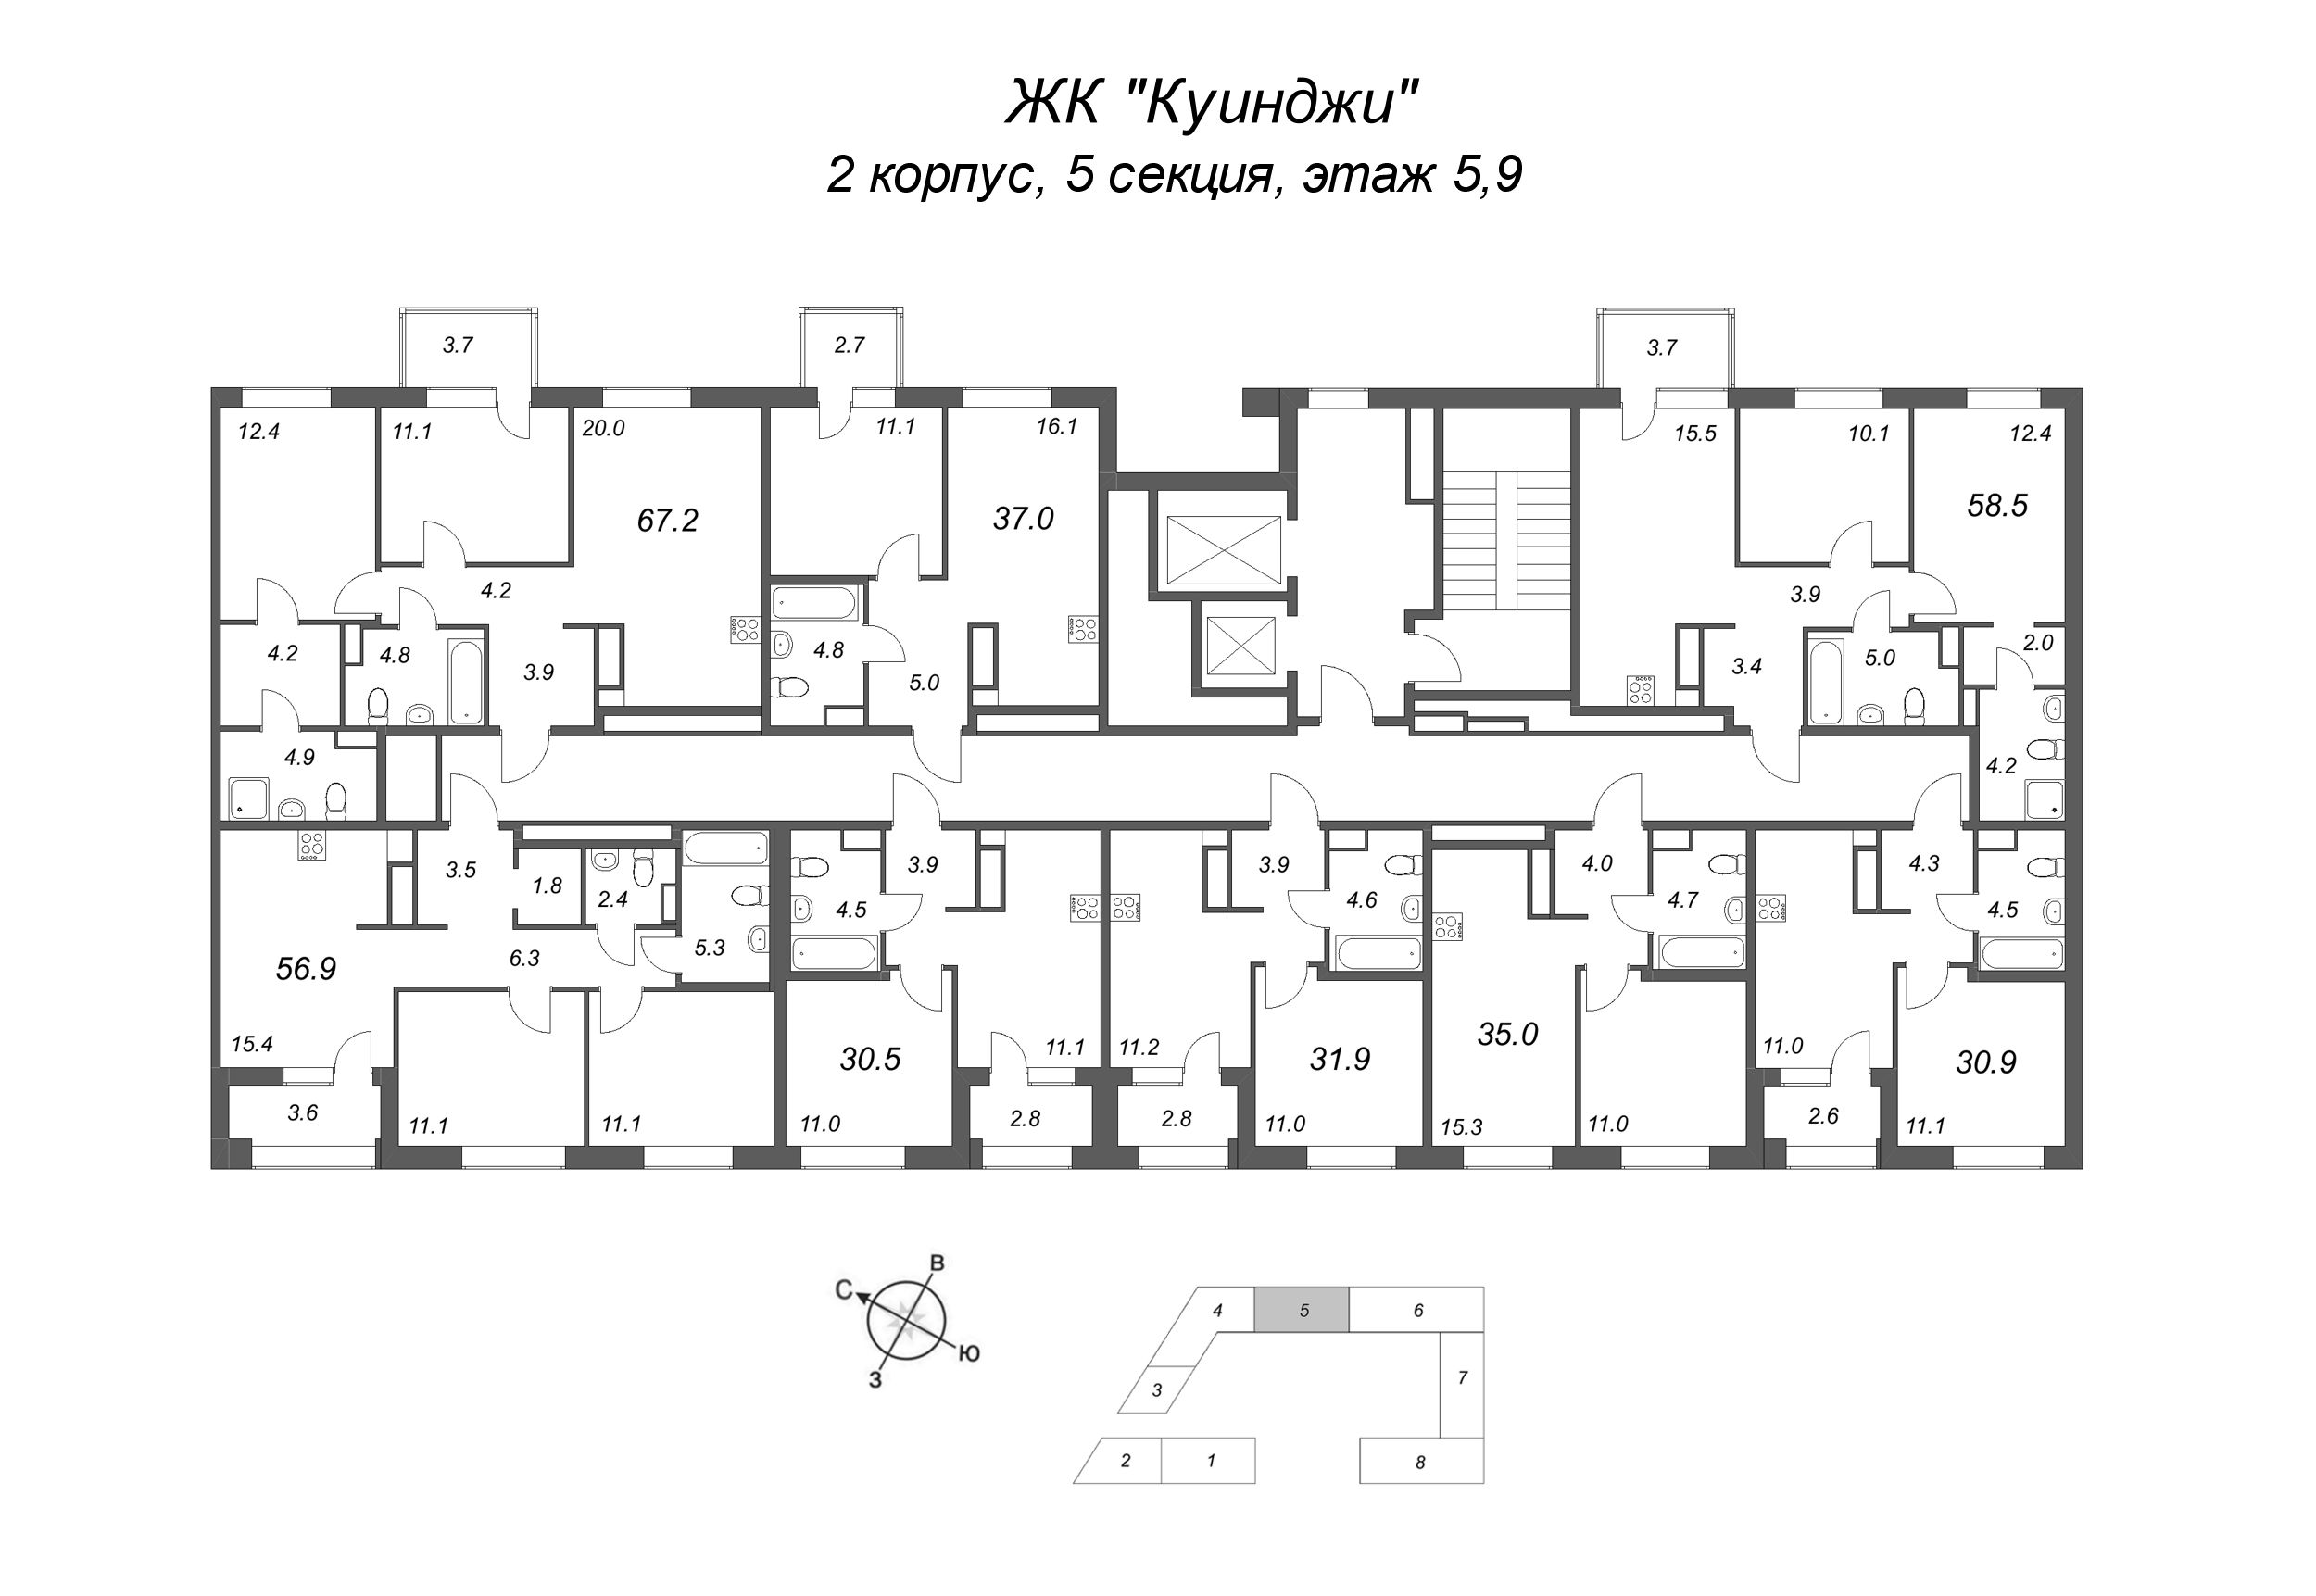 2-комнатная (Евро) квартира, 37 м² в ЖК "Куинджи" - планировка этажа